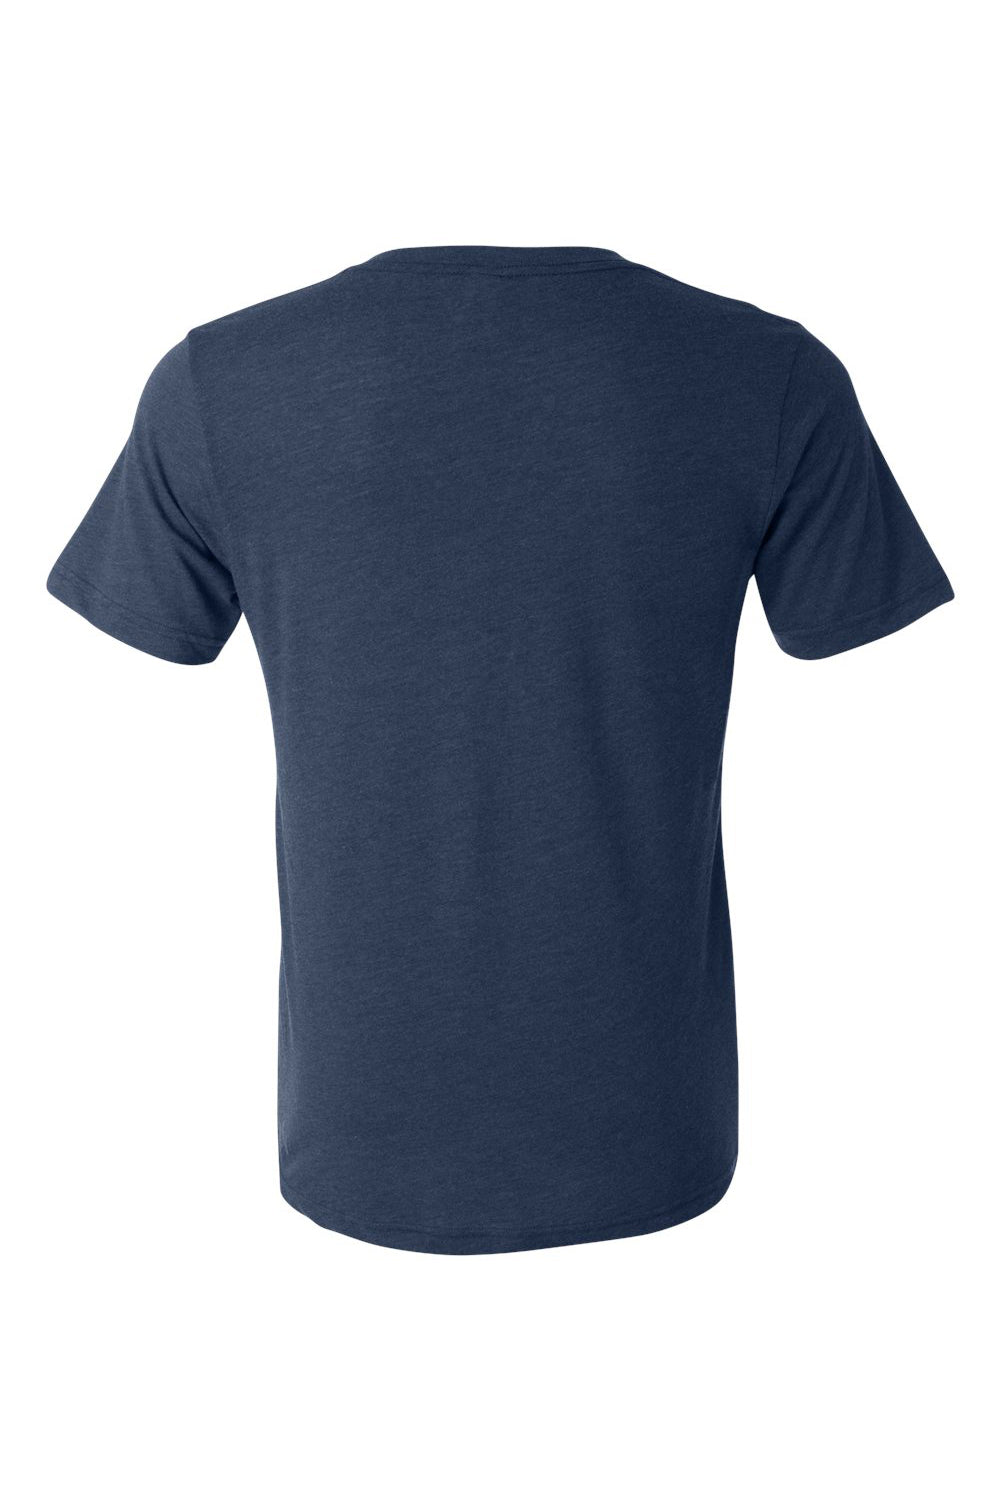 Bella + Canvas BC3415/3415C/3415 Mens Short Sleeve V-Neck T-Shirt Navy Blue Flat Back